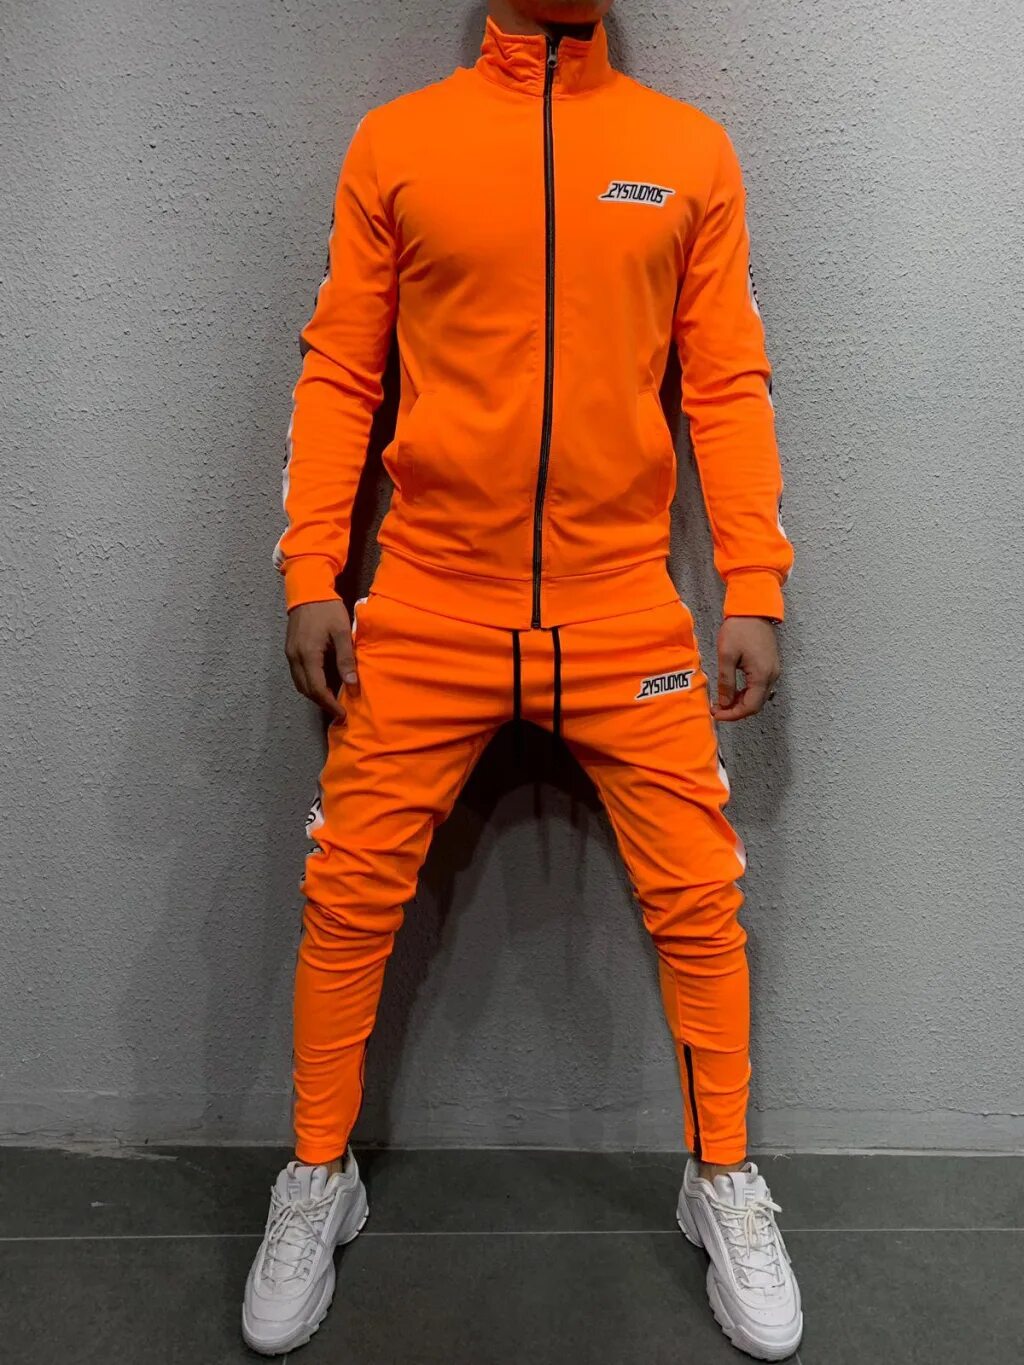 Спортивный костюм найк оранжевый. Оранжевый костюм адидас. Оранжевый спортивный костюм мужской адидас. Спортивка найк оранжевая.